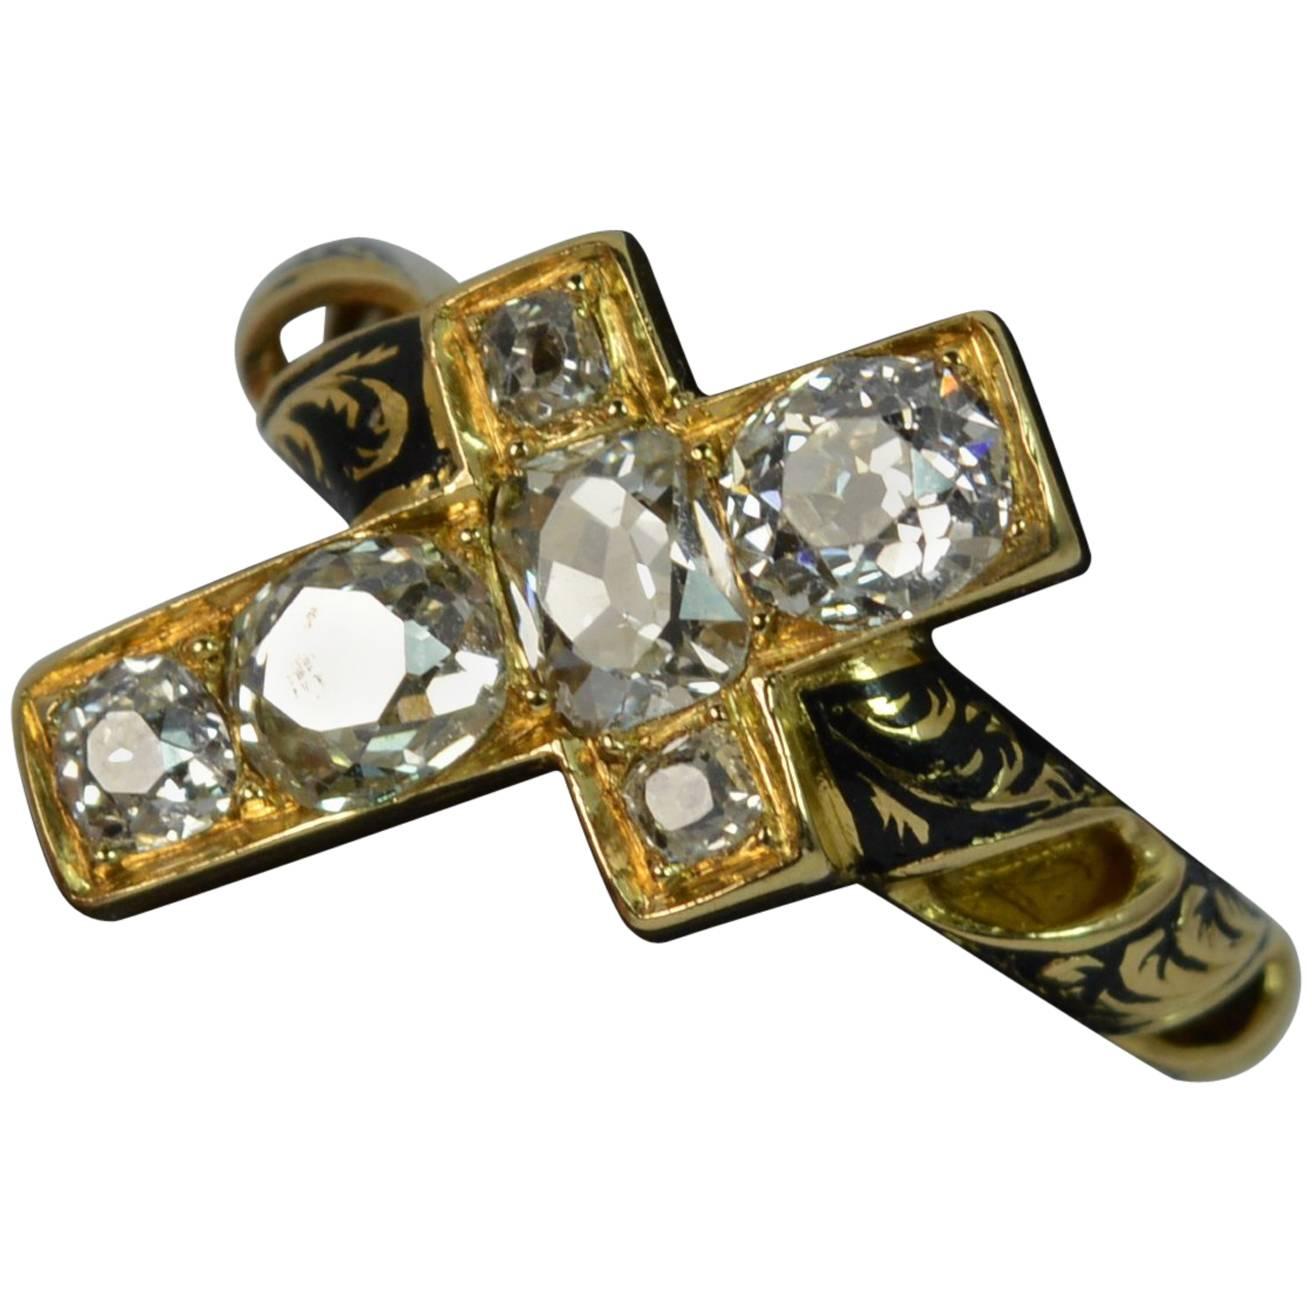 1.60 Carat VS Old Cut Diamond 18 Carat Gold and Enamel Cross Mourning Ring